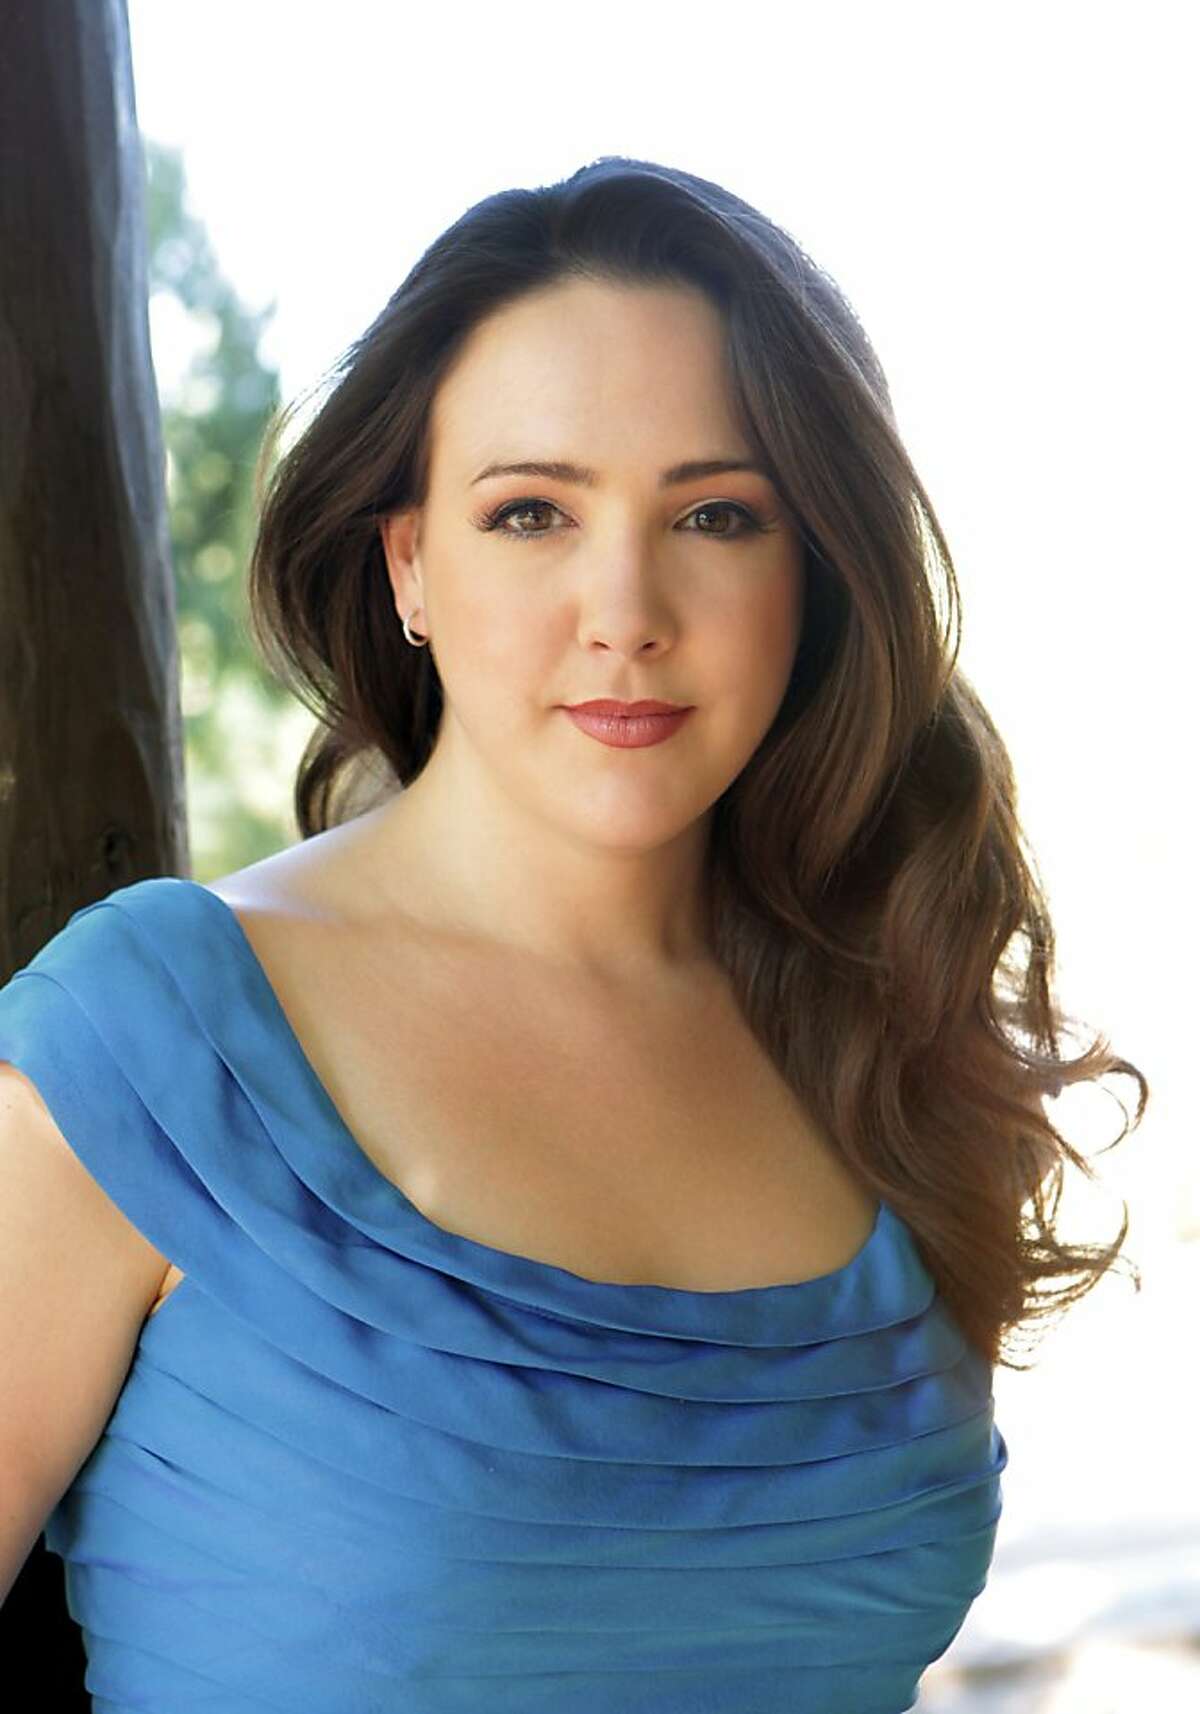 Soprano Susanna Phillips gives a recital Feb. 24 at Cal Performances,